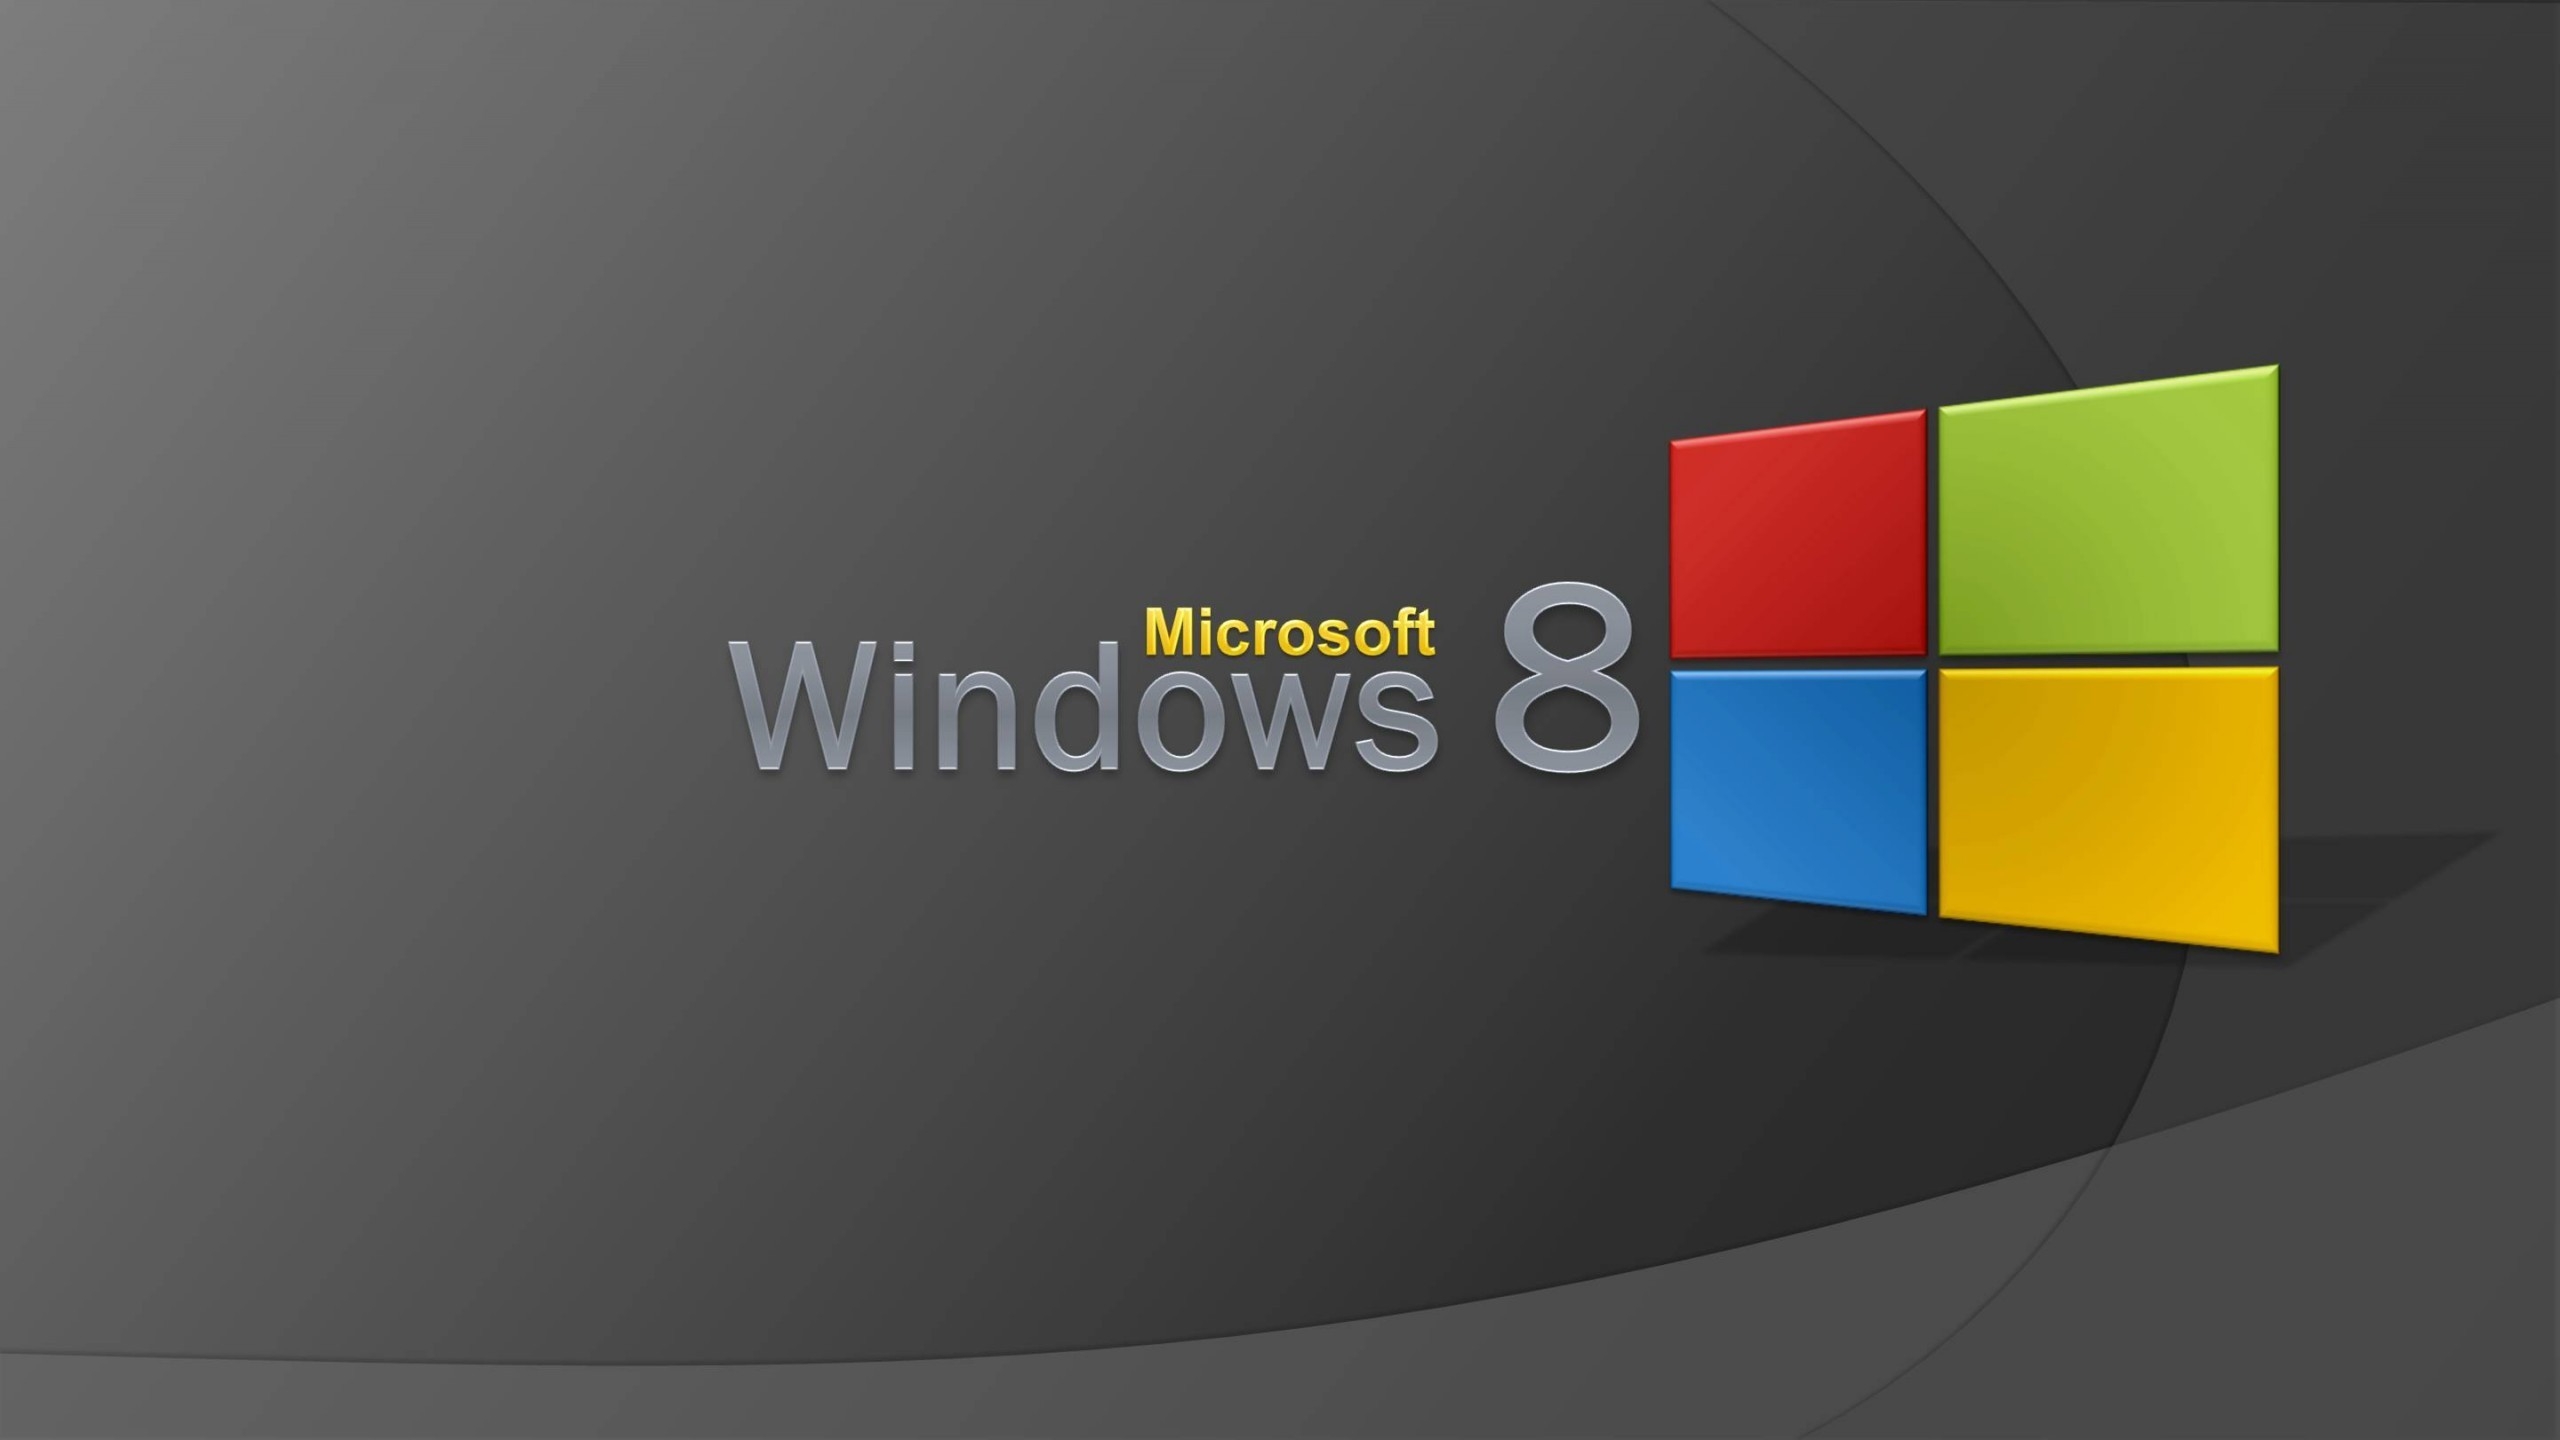 Microsoft Windows 8 for 2560x1440 HDTV resolution